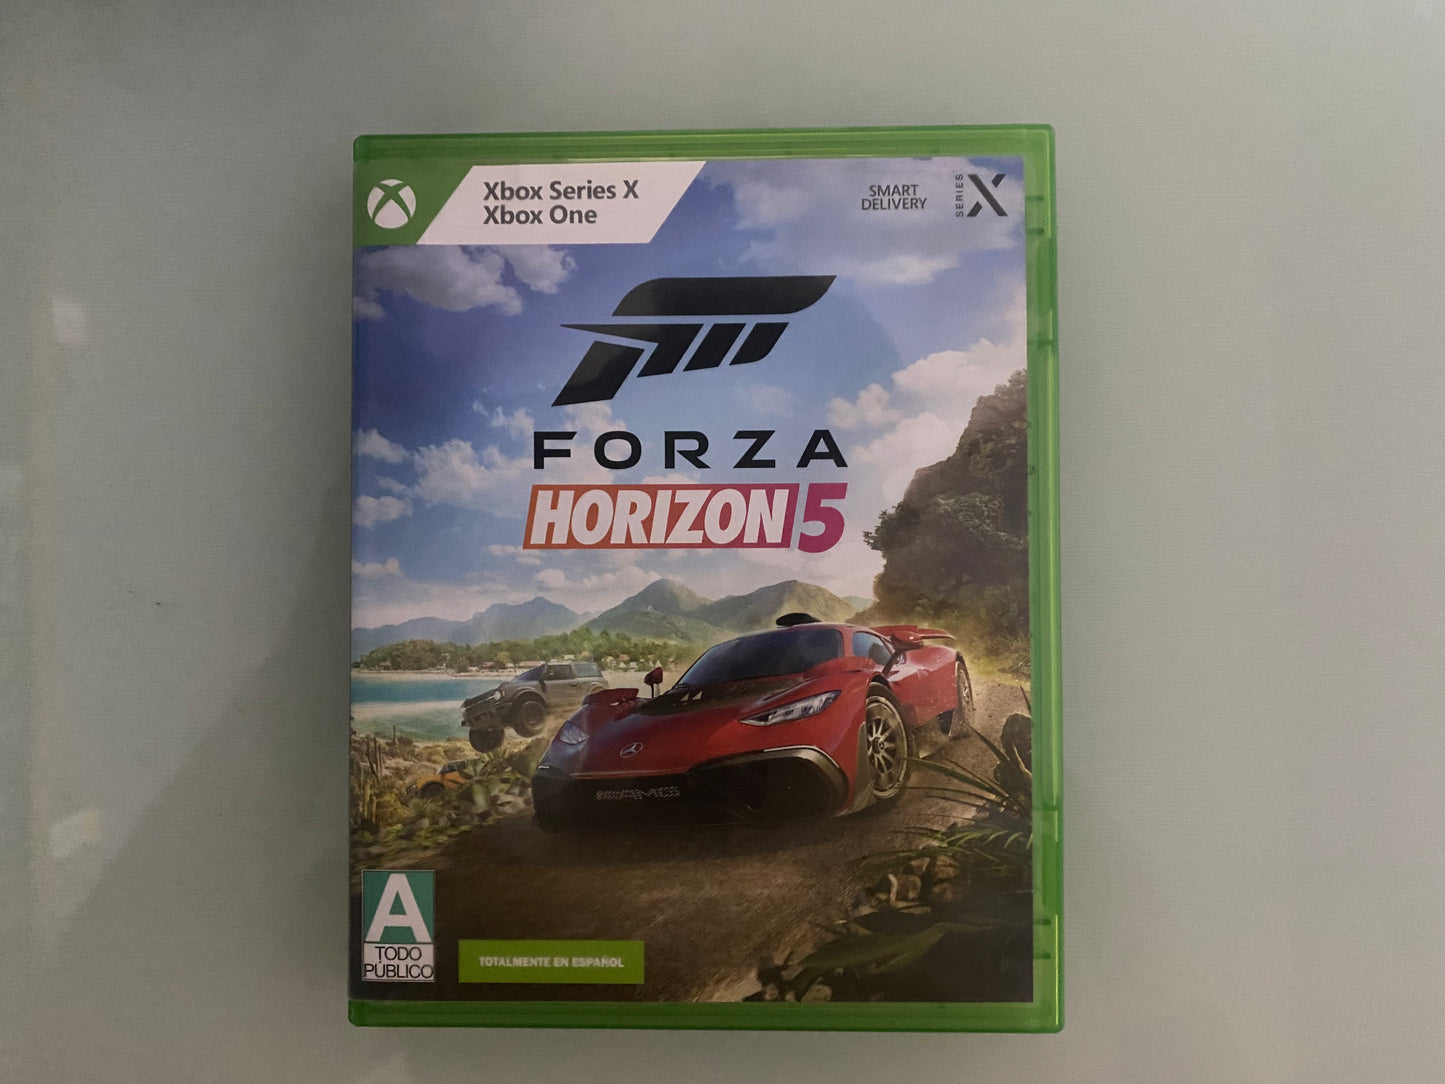 .Geekienda - Videojuegos juego forza horizon 5  - Microsoft Xbox one series s series x